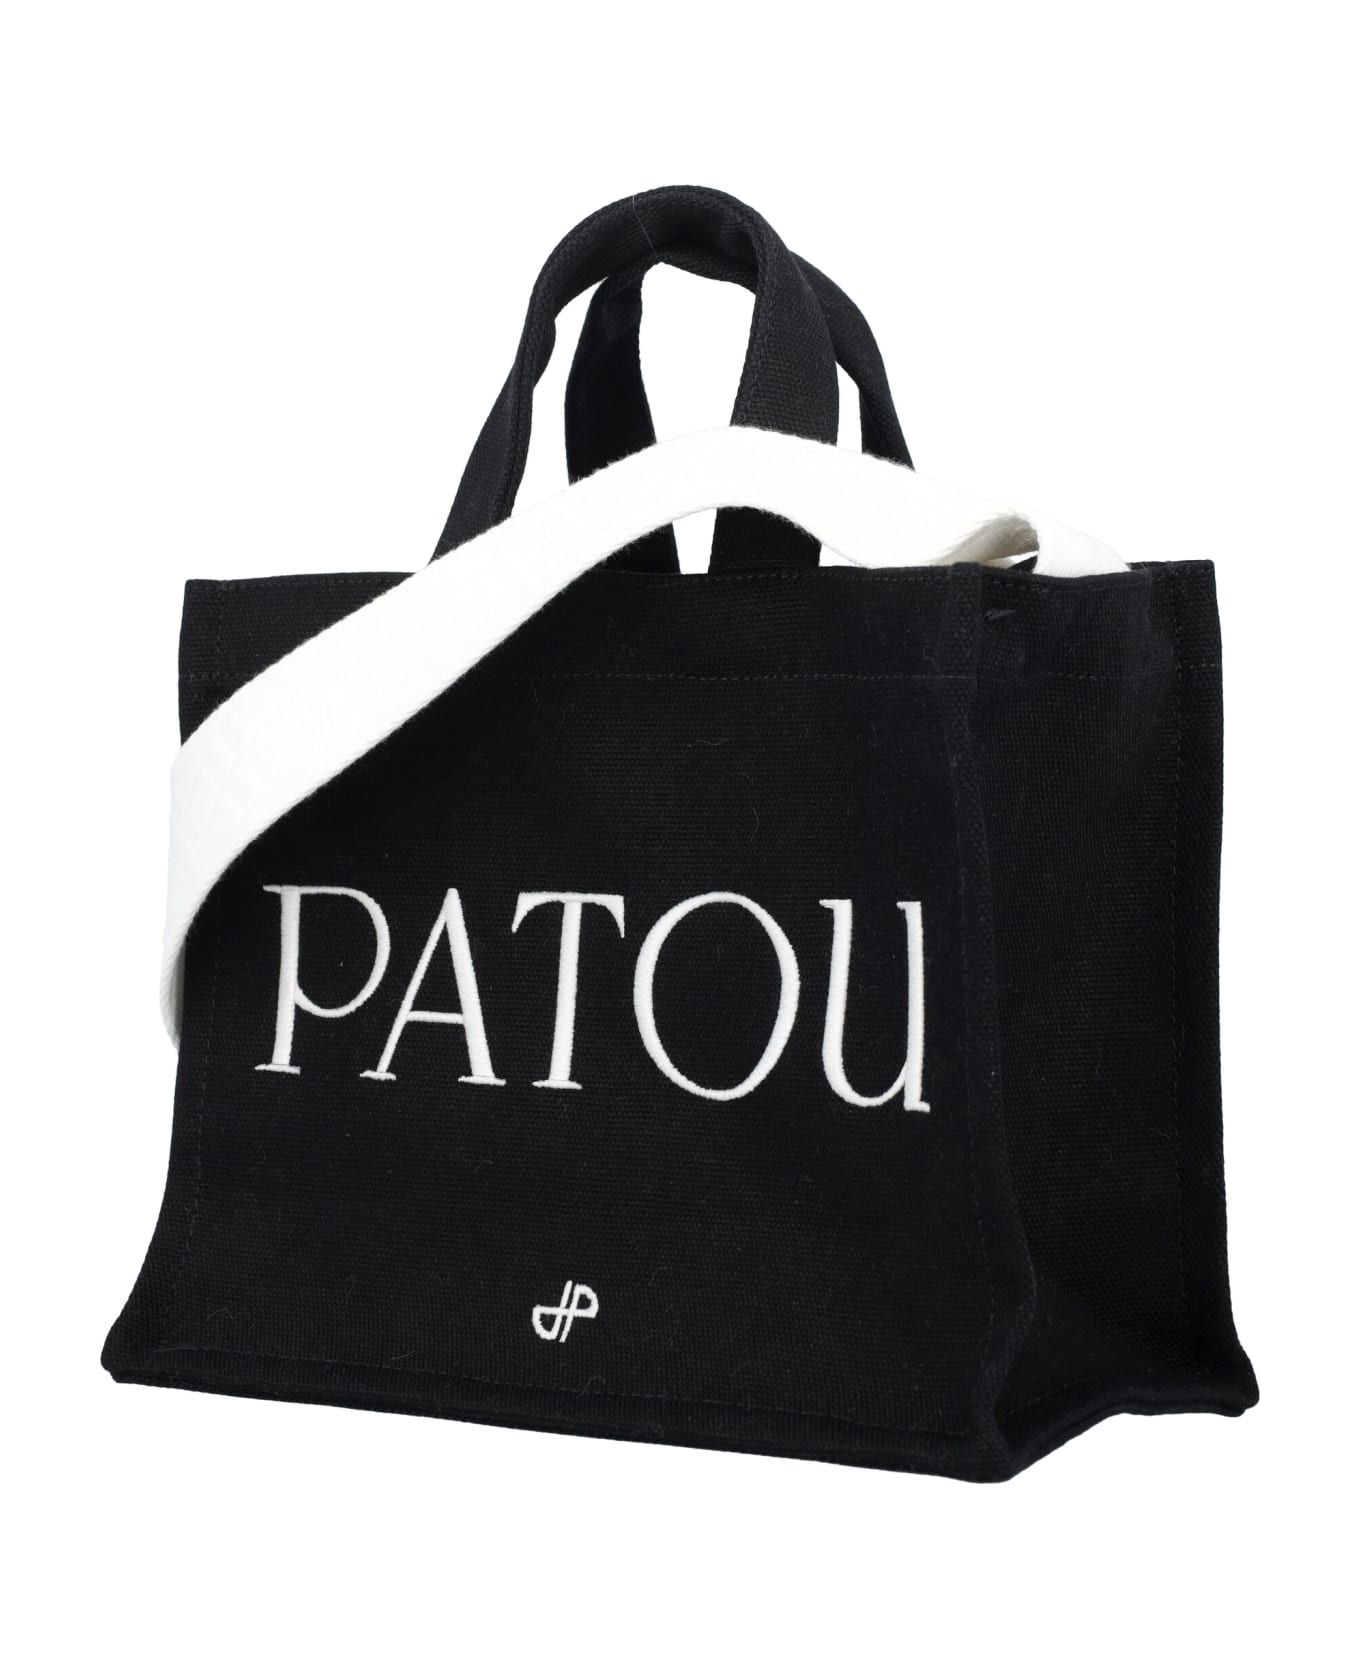 Patou Small Canvas Tote Bag - BLACK